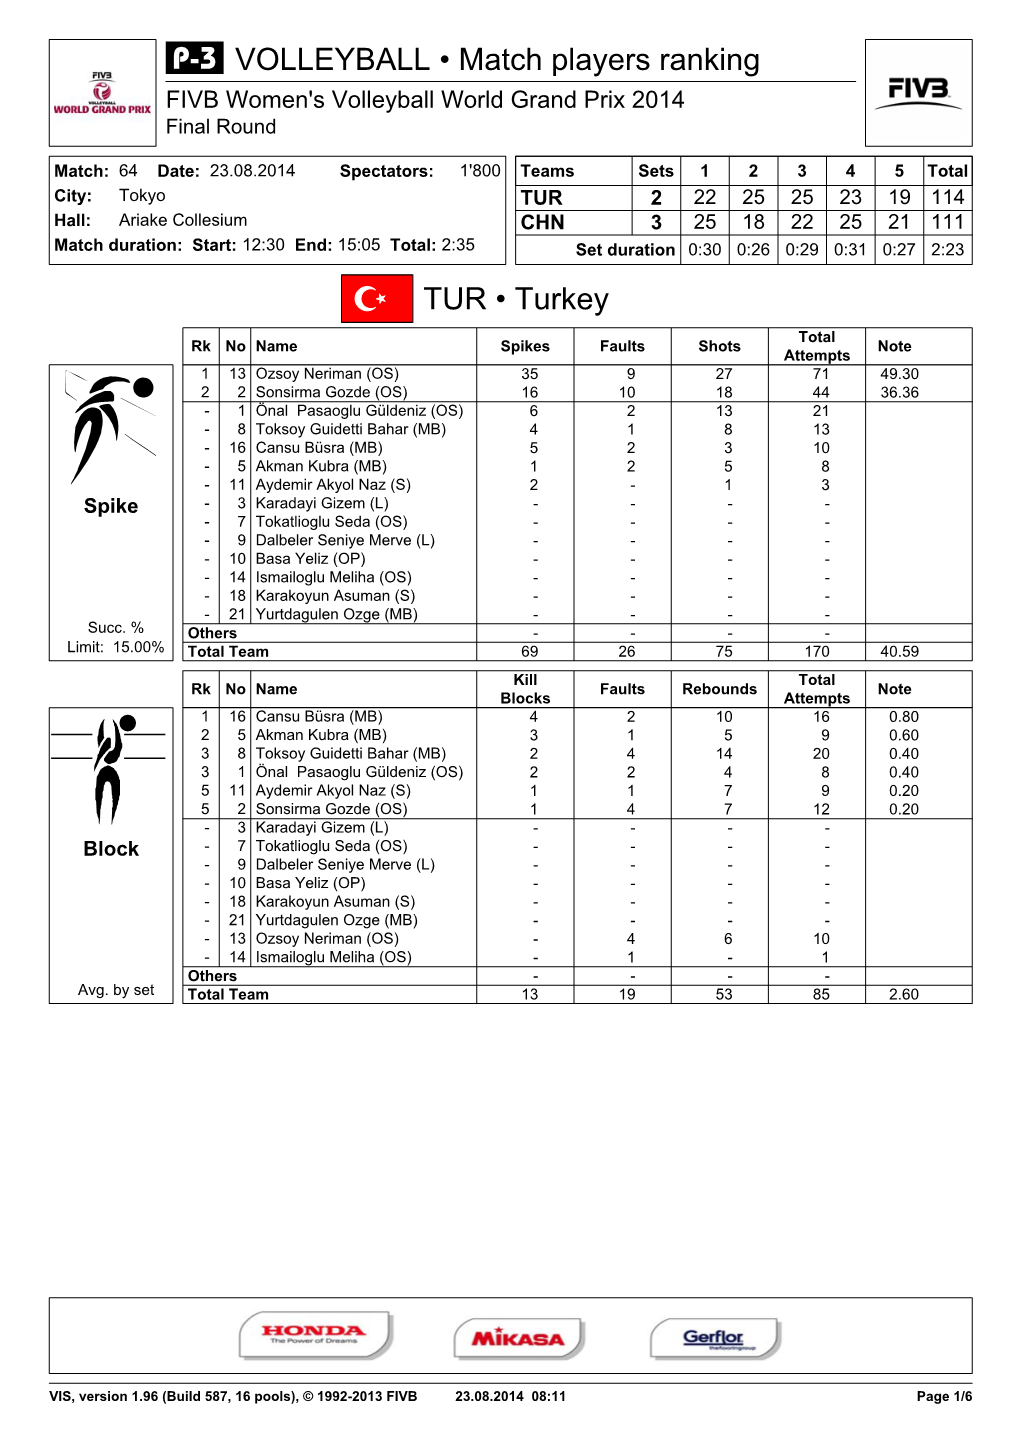 TUR • Turkey VOLLEYBALL • Match Players Ranking